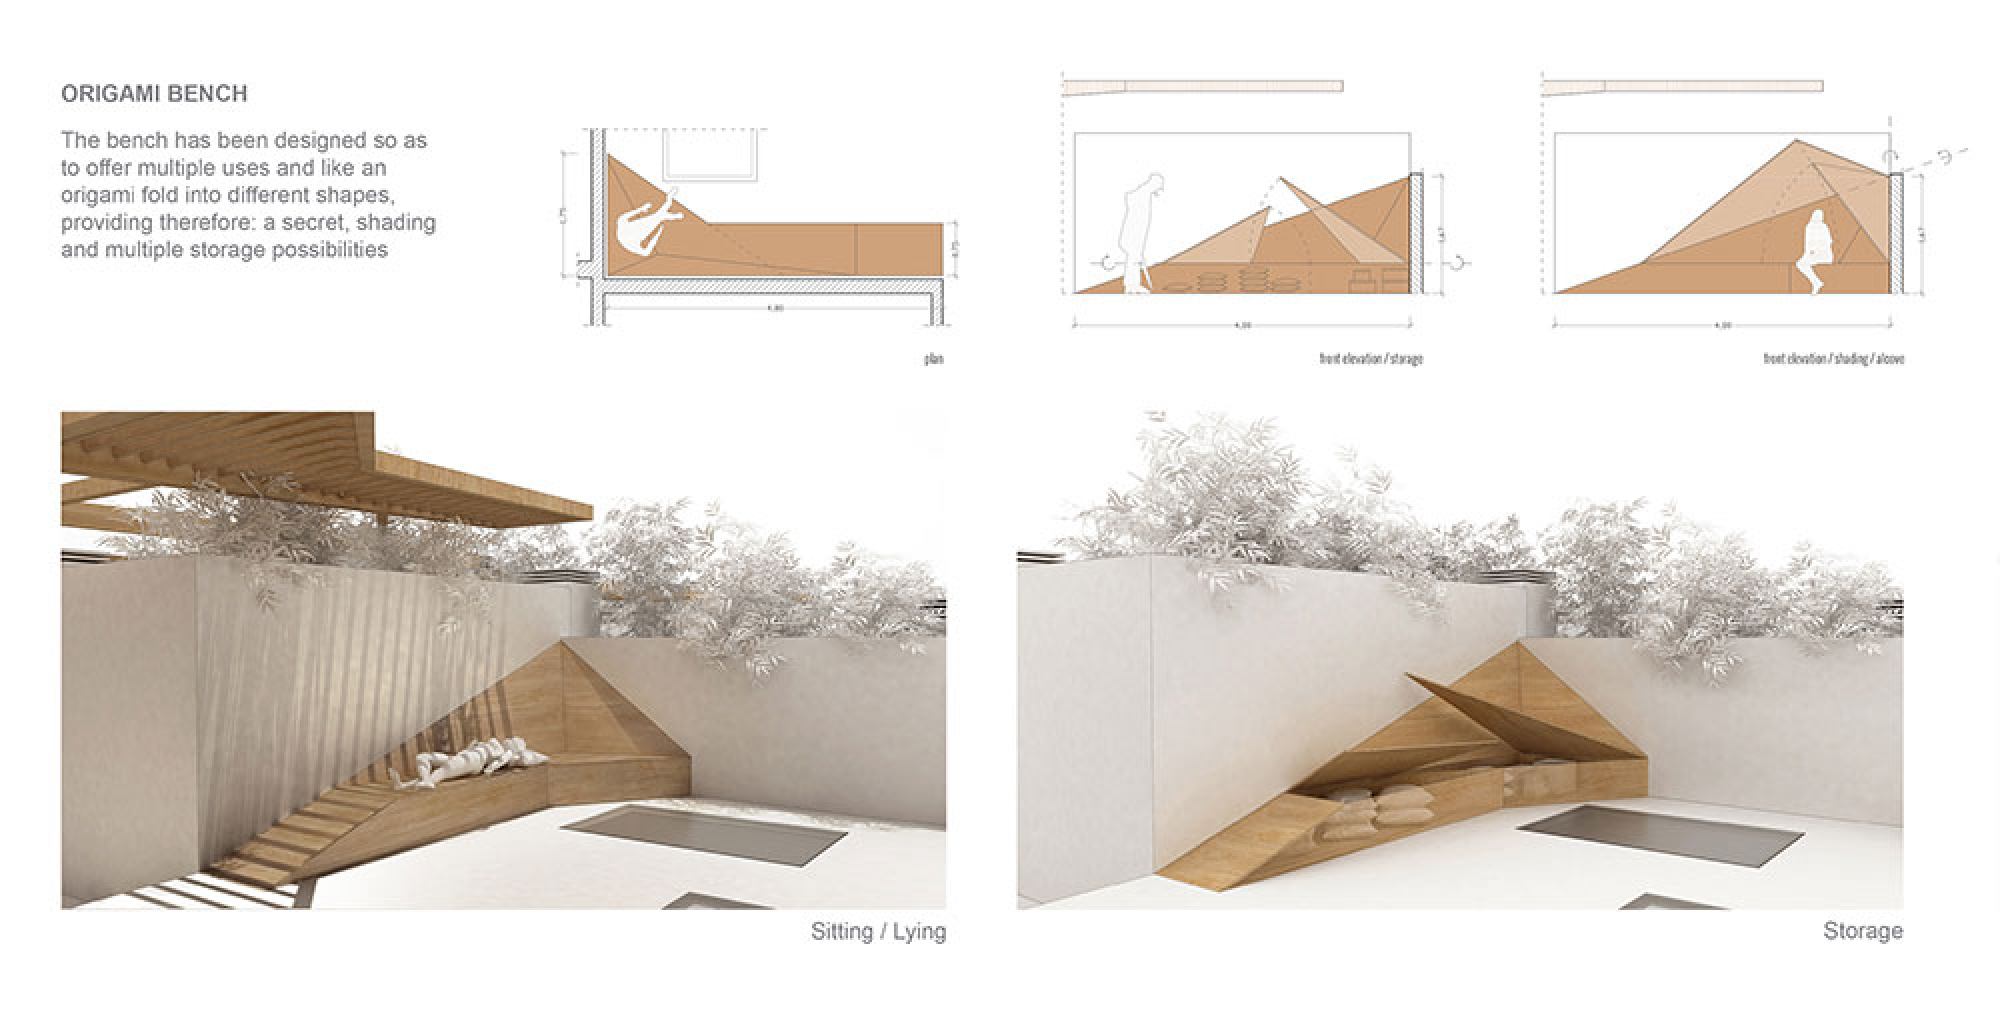 MCA-Foret-urbaine-benches-Origami.jpg